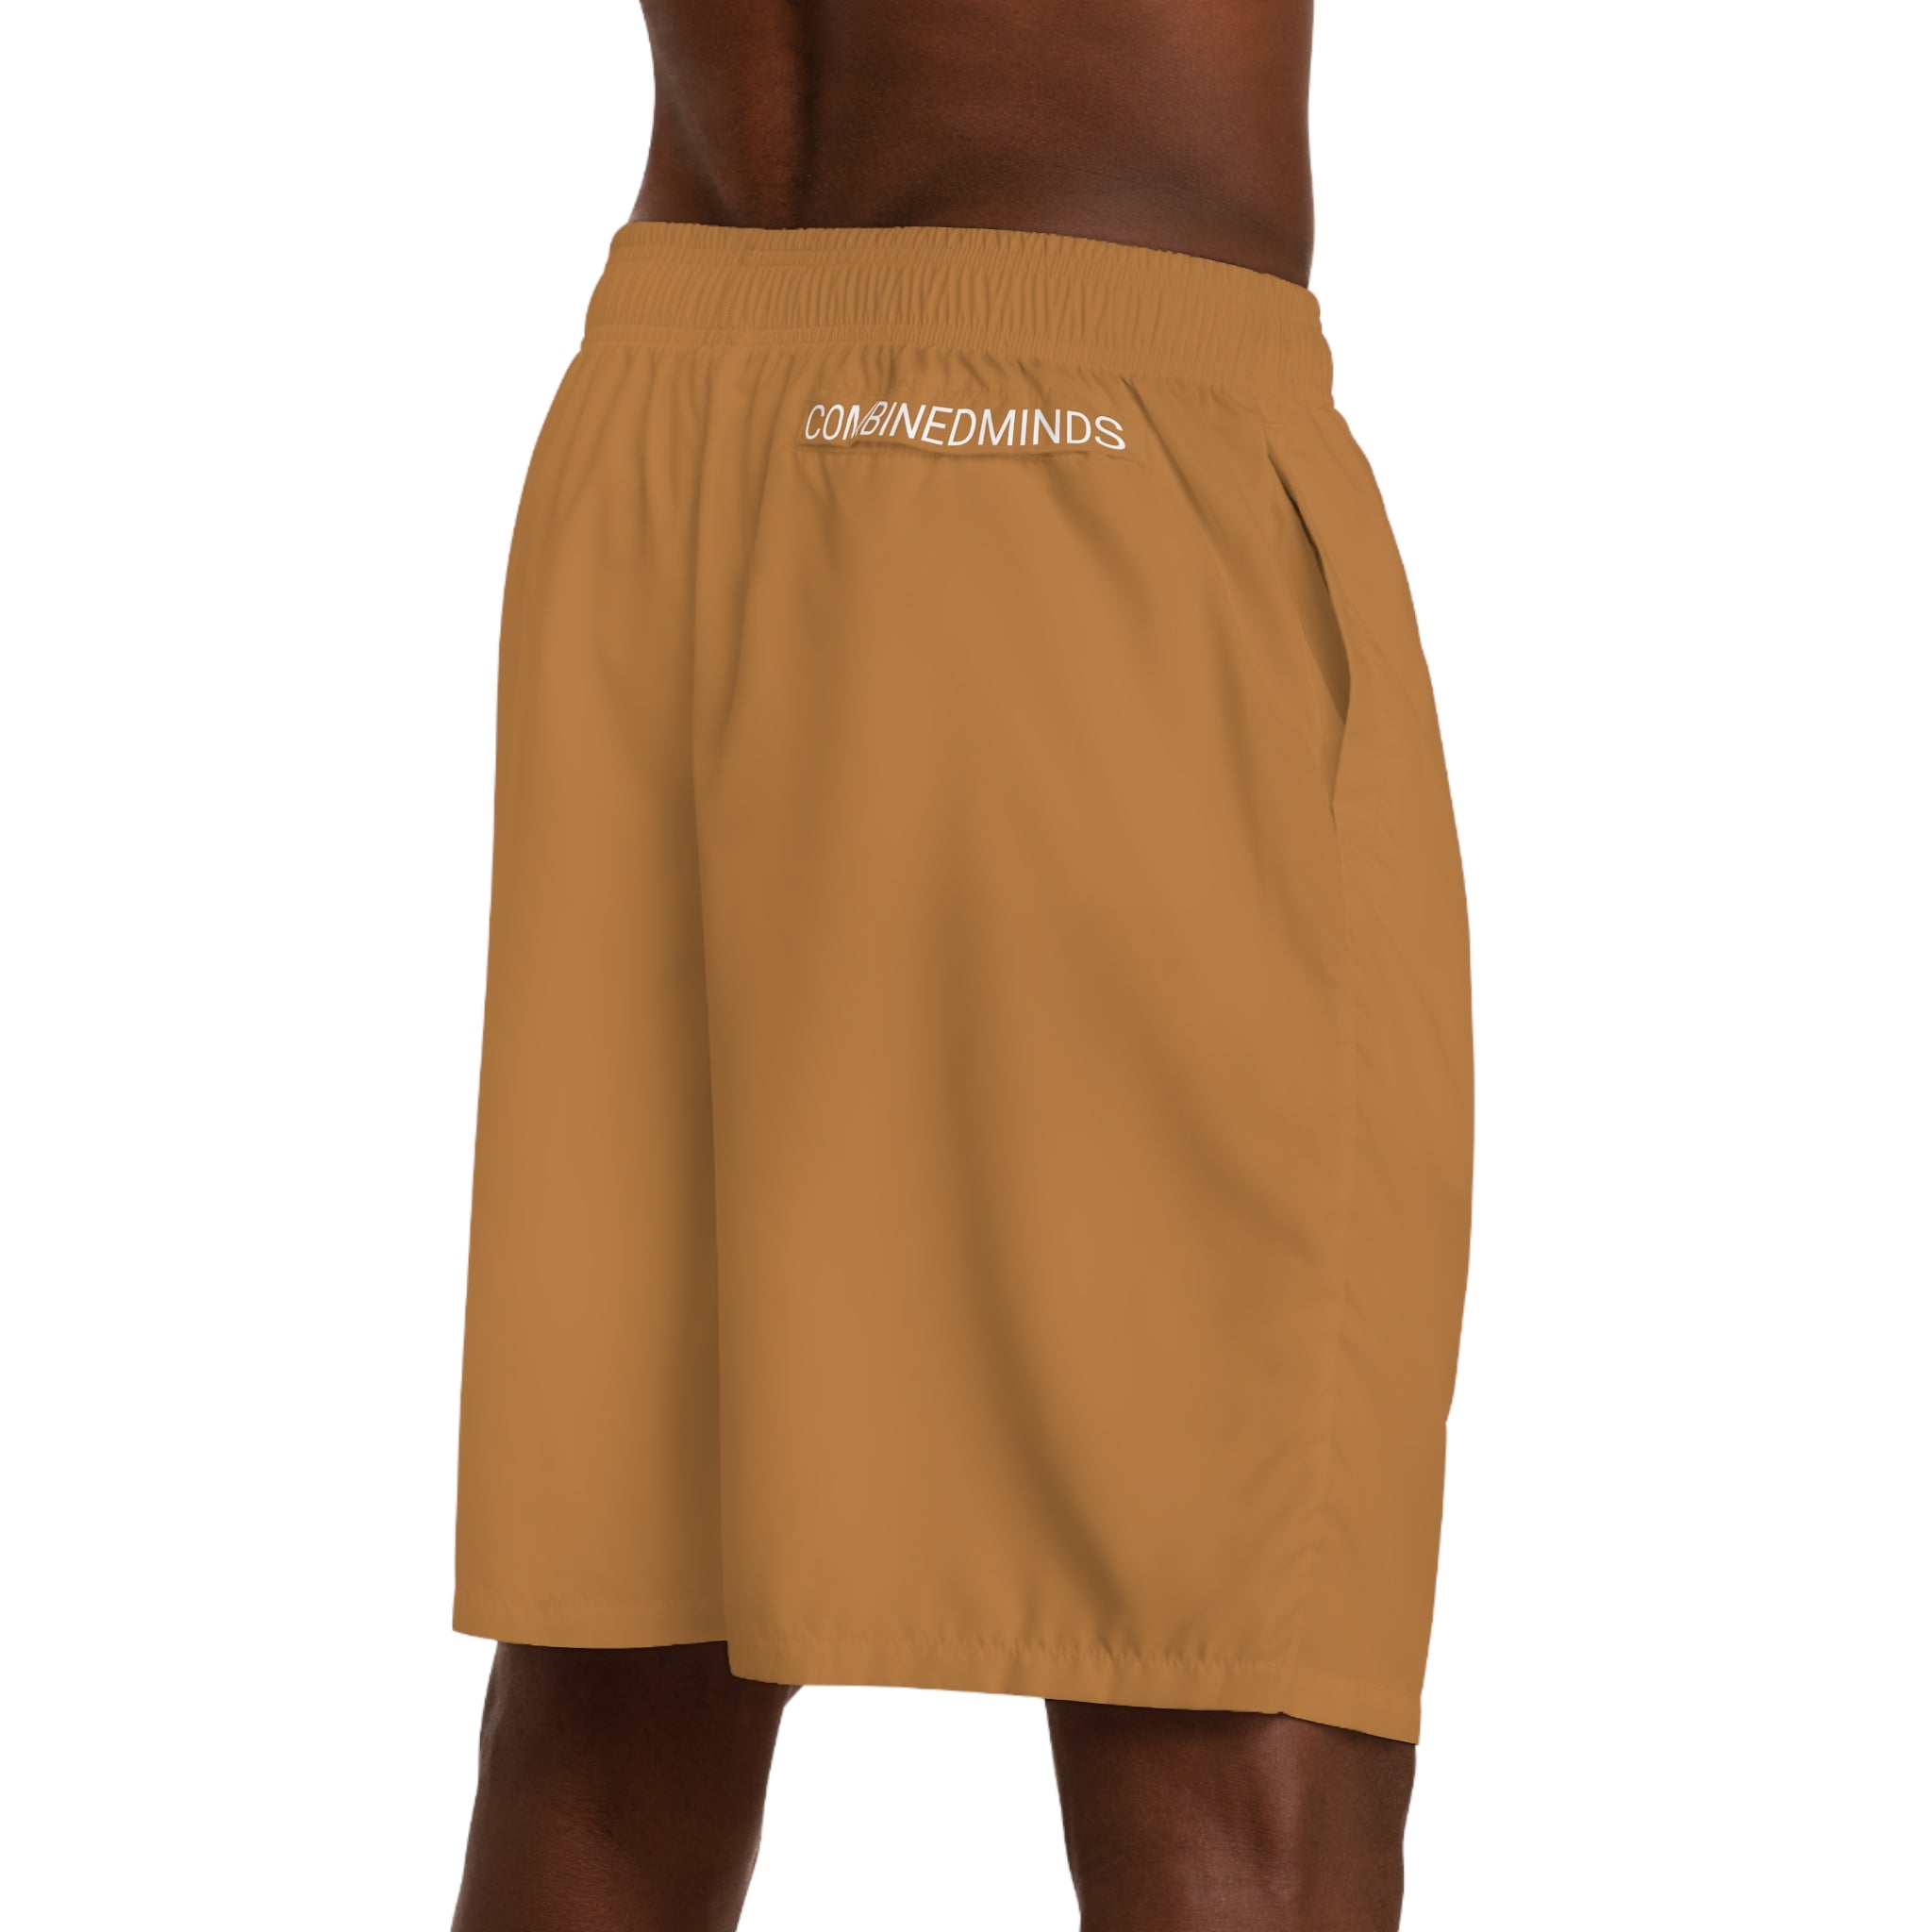 CombinedMinds Men's Jogger Shorts LightBrown/White Logo